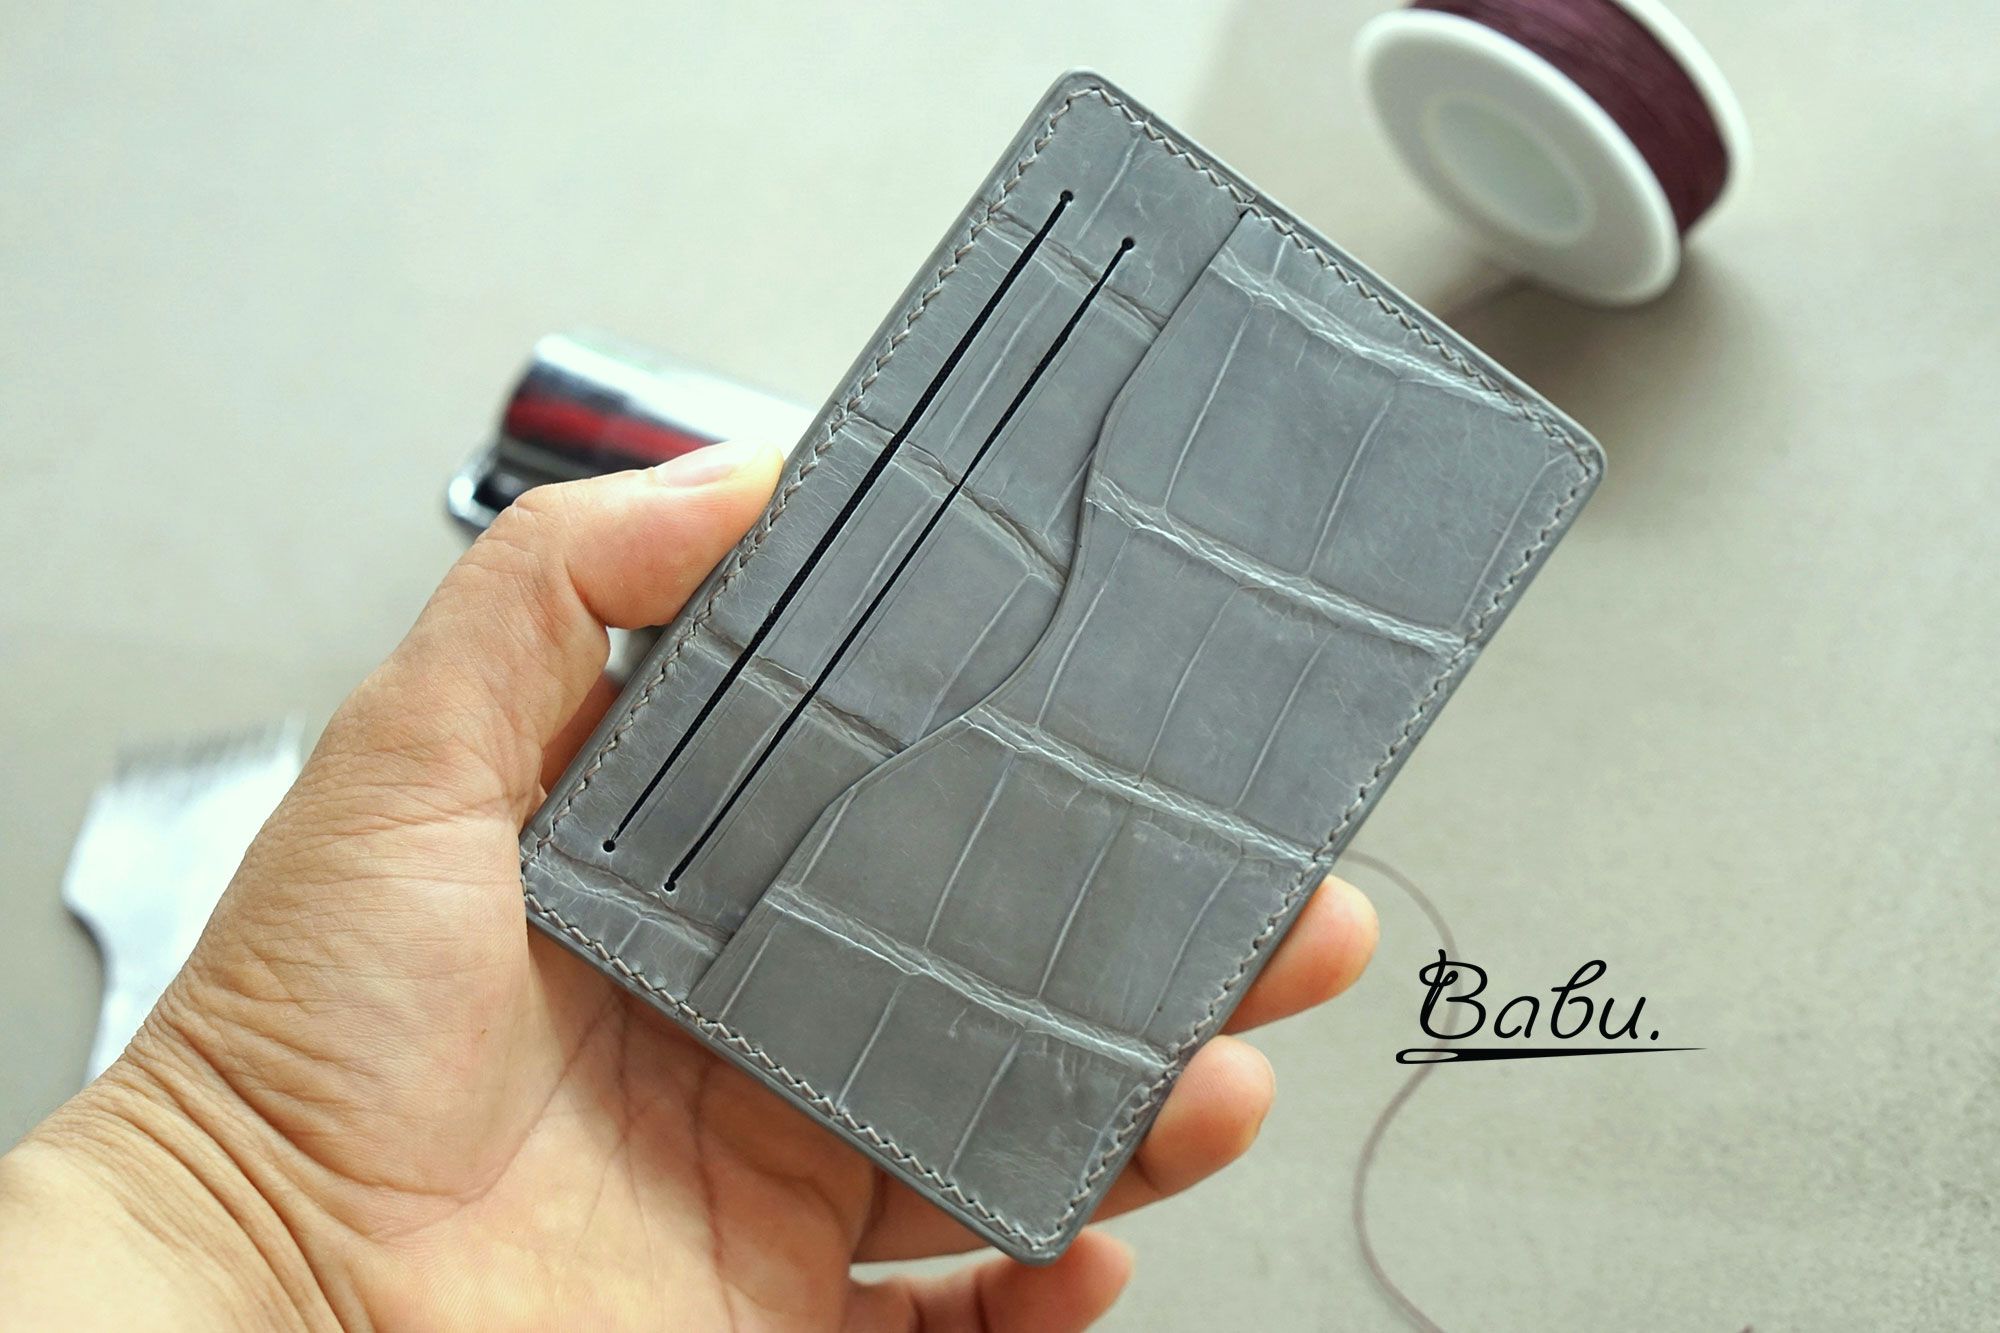 Premium Epi leather Credit Card Holder, Dark Green leather card wallet WL139